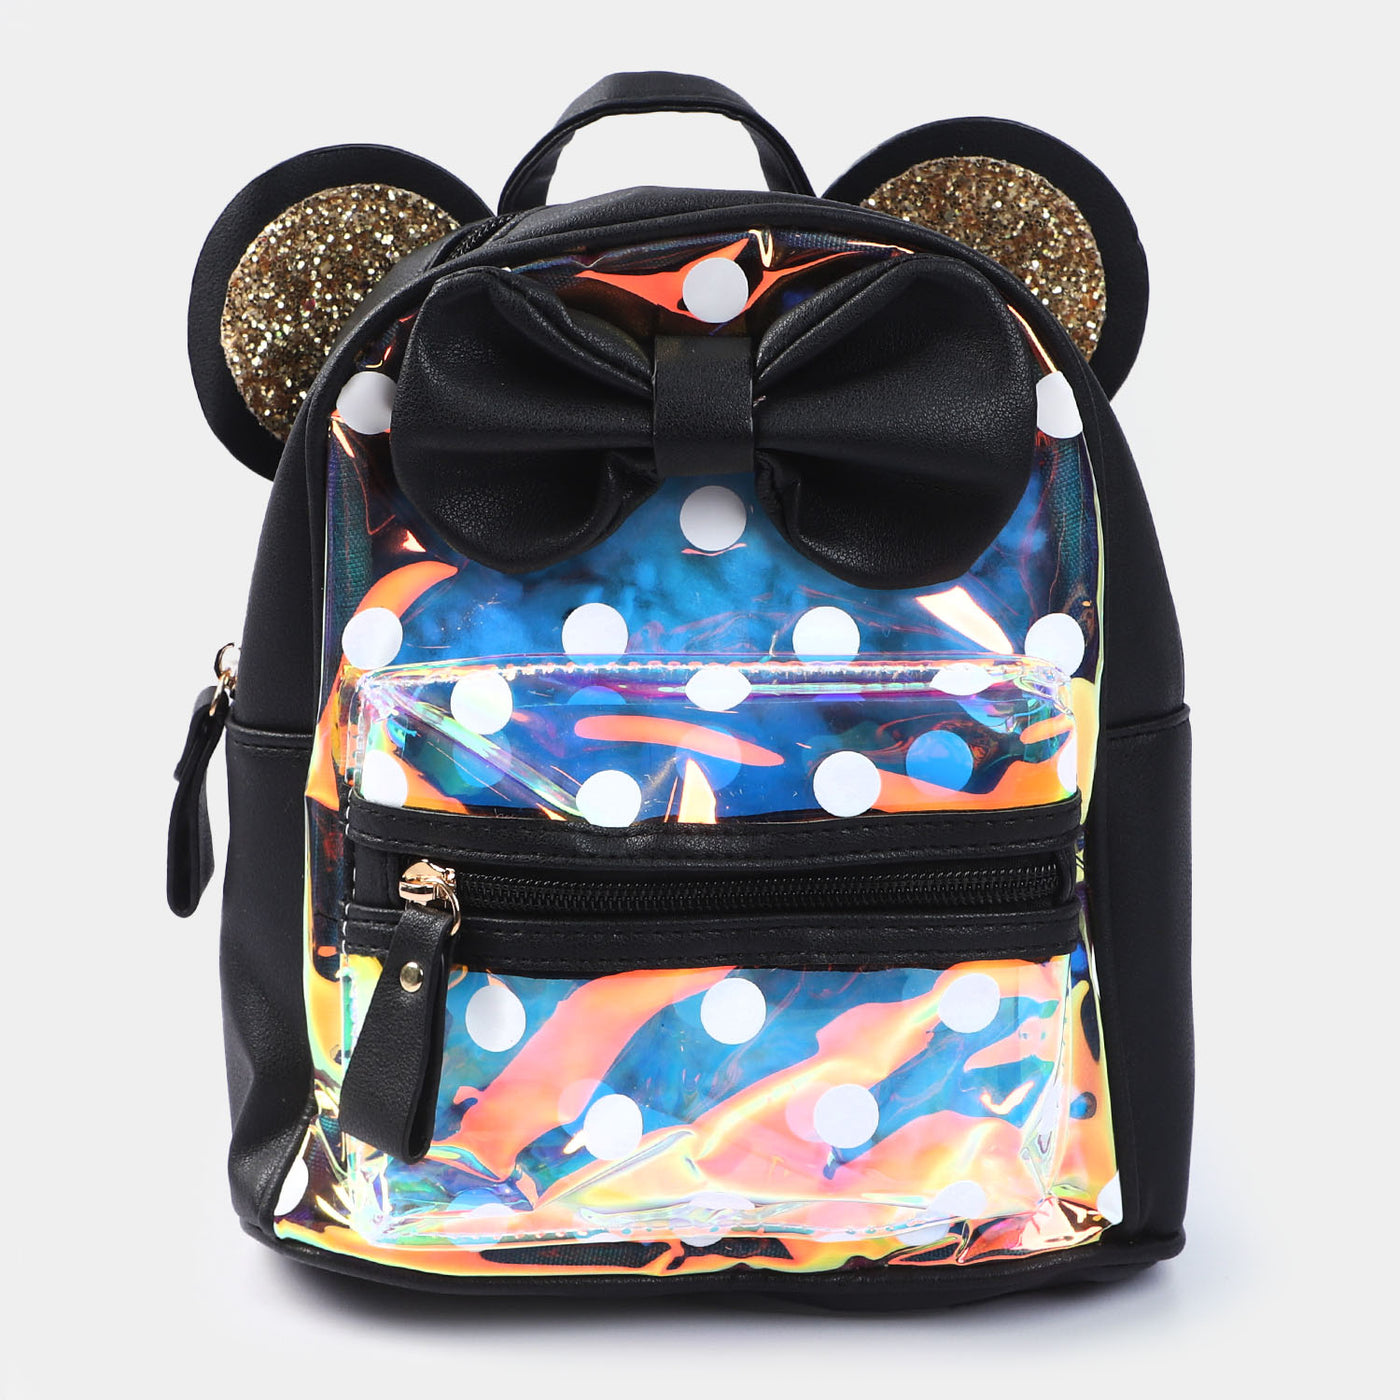 Fancy Backpack Cute | BLACK